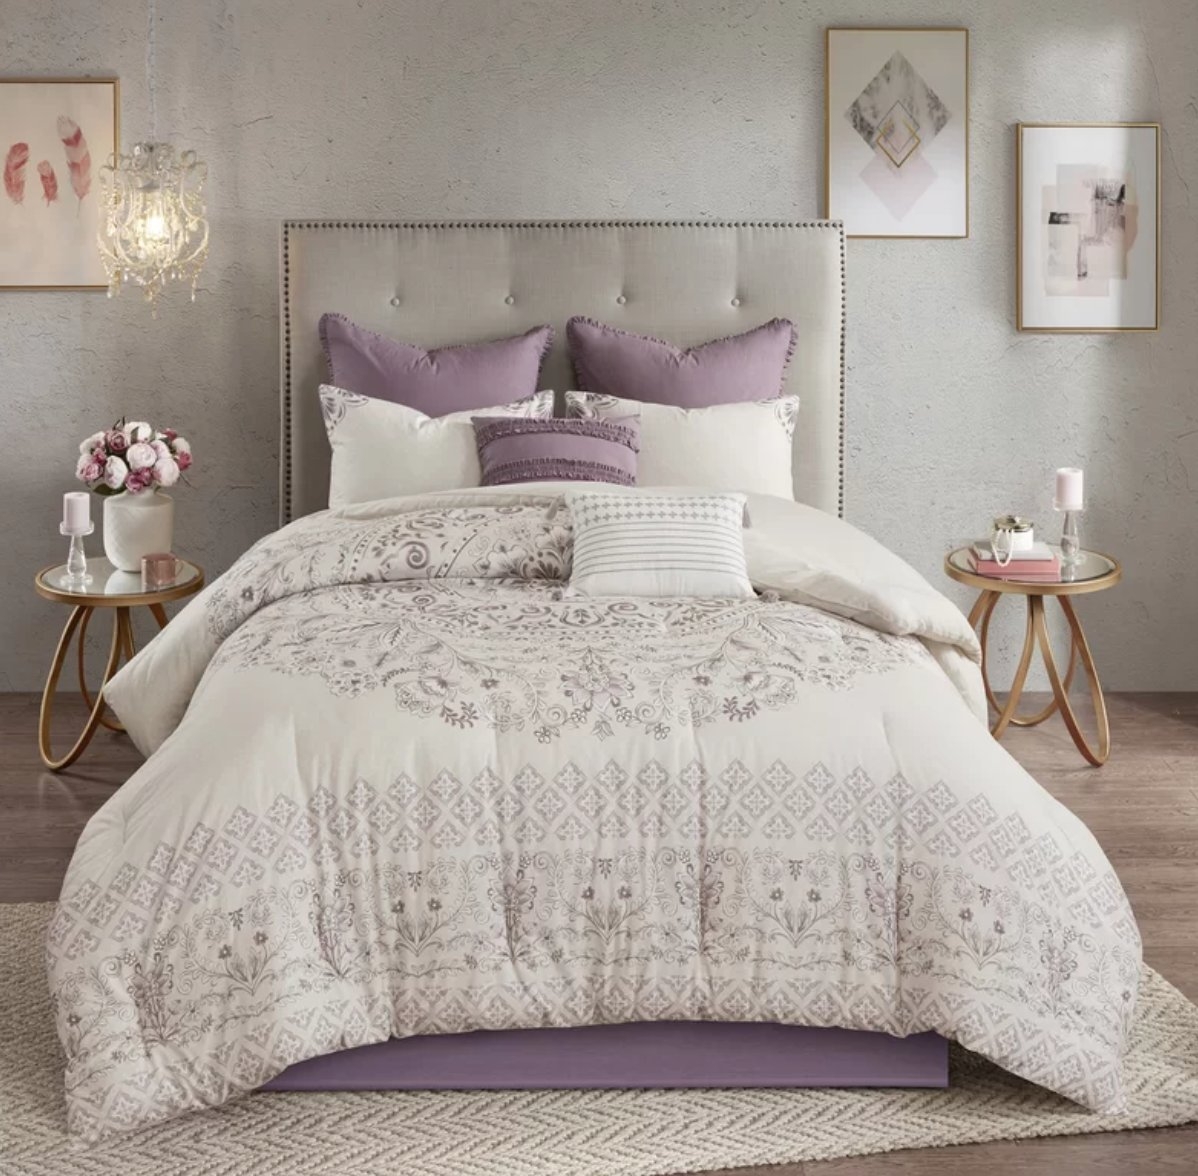 Guion Reversible Comforter Set - Purple, King - Image 0